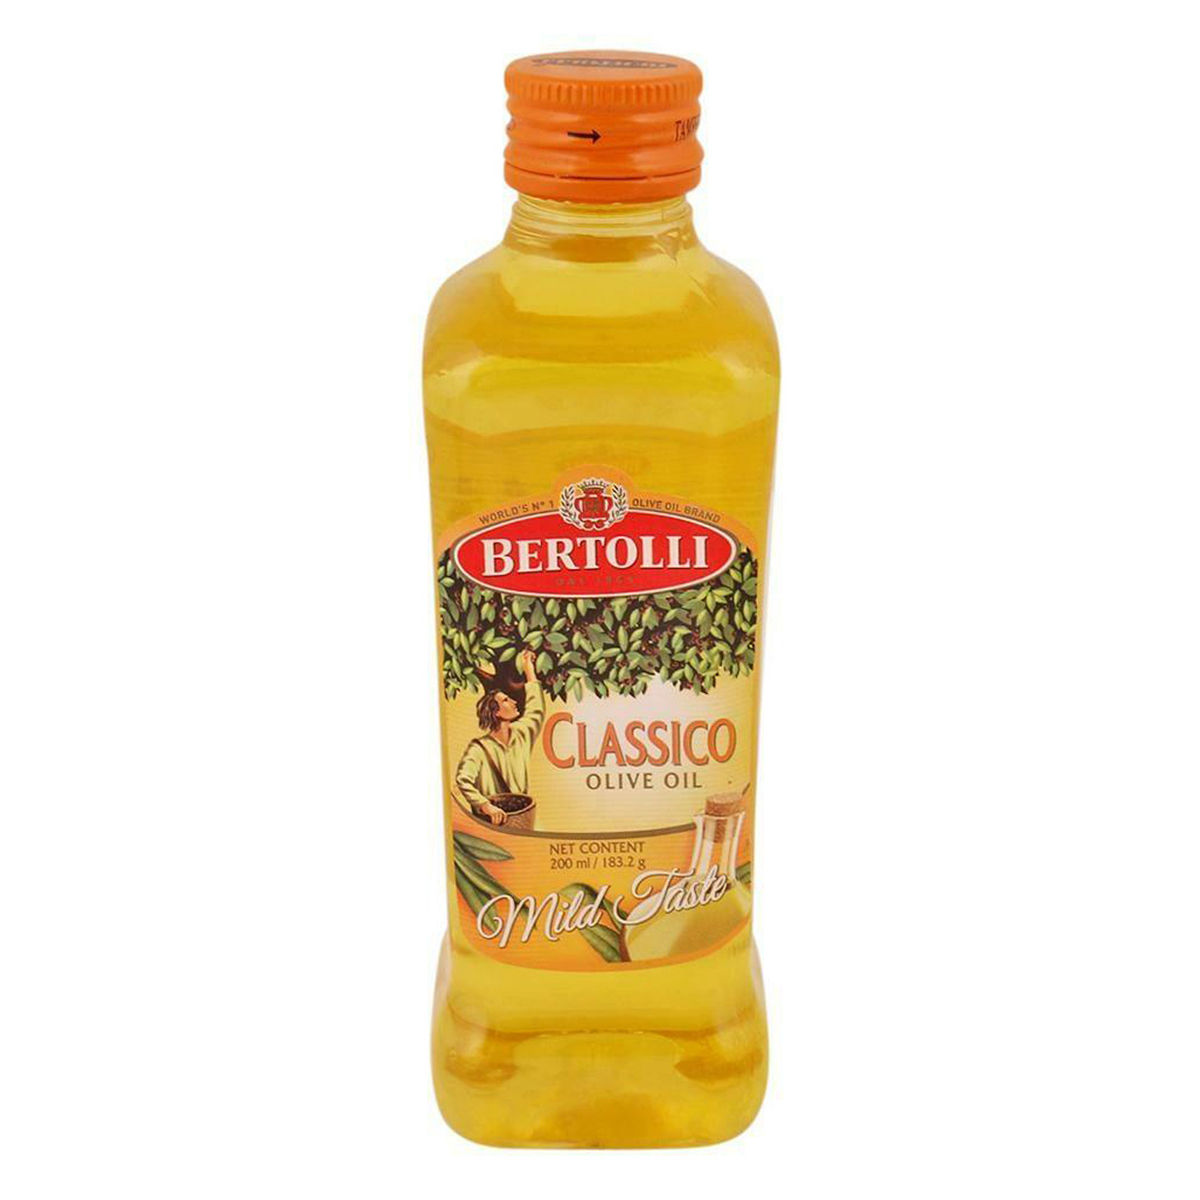 Buy Bertolli Classico Olive Oil, 200 ml Online